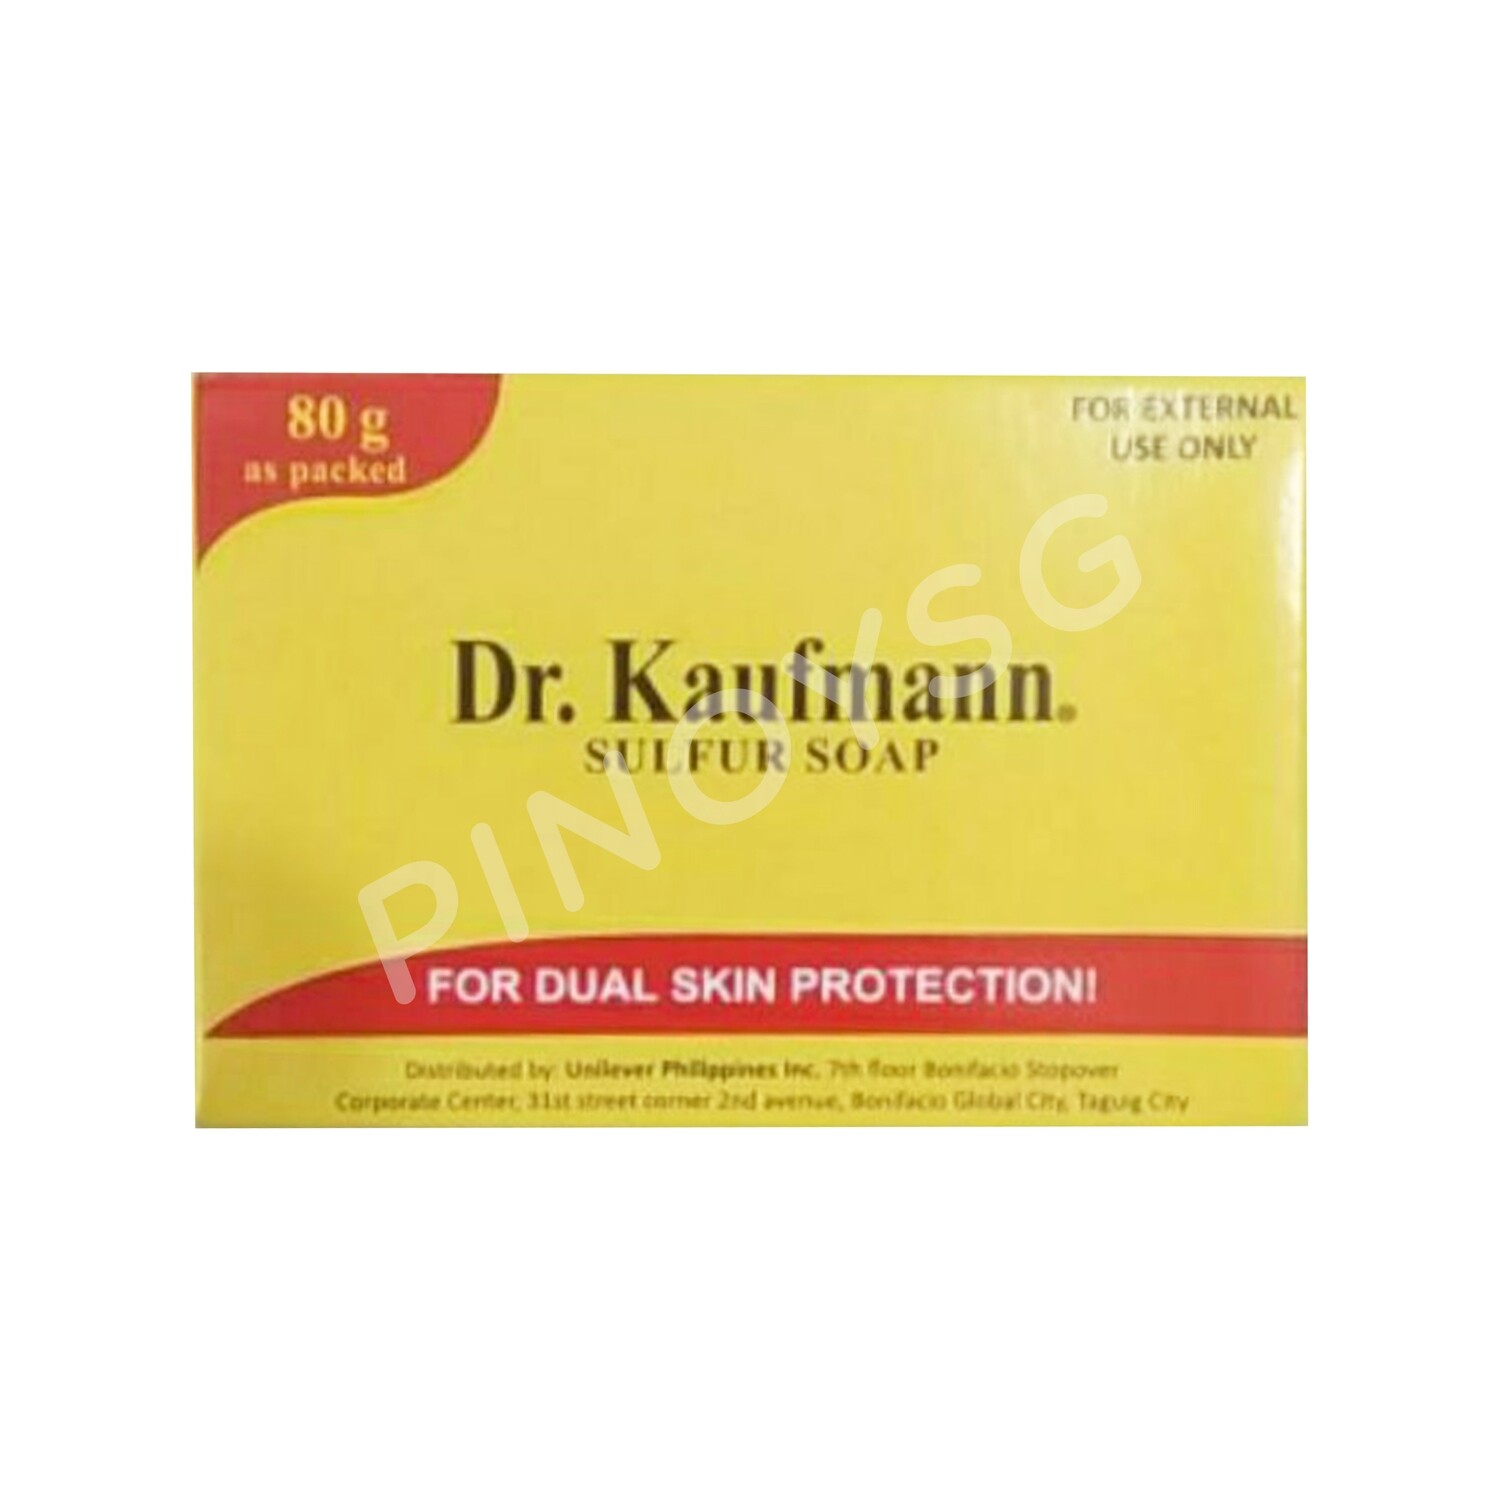 Dr. Kaufmann Sulfur Soap For Dual Skin Protection 80g